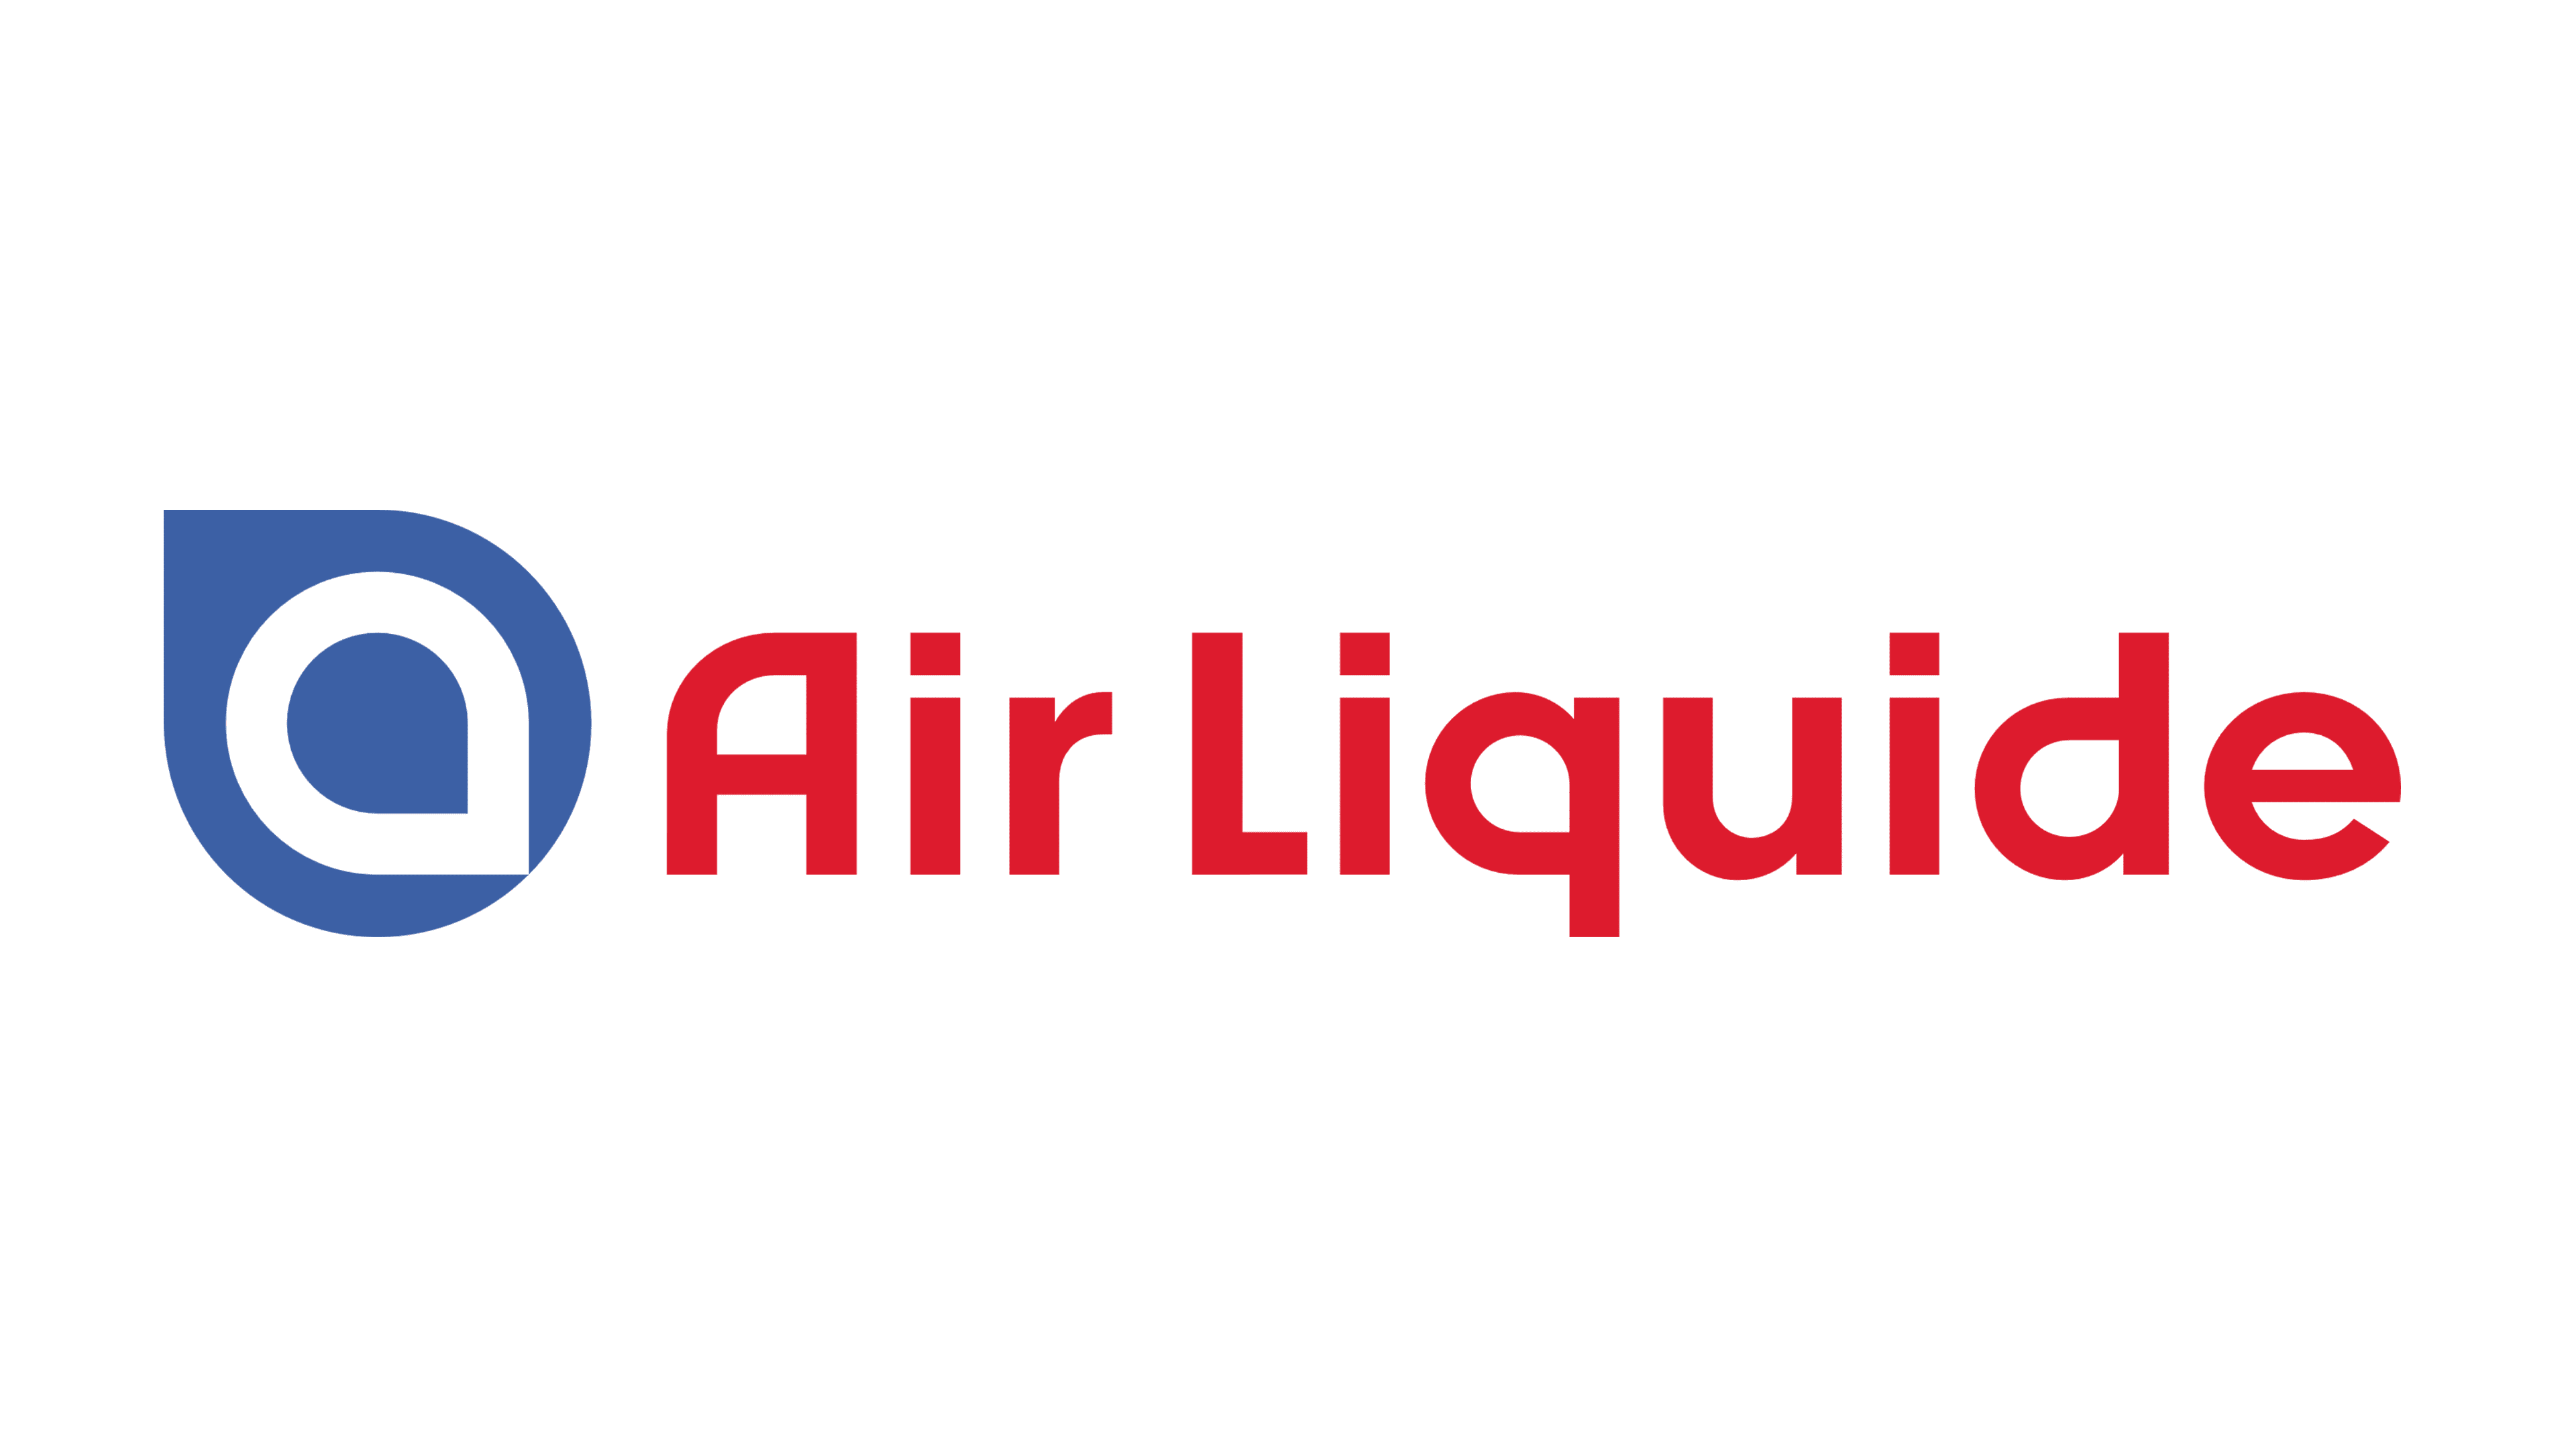 Air Liquide Logo